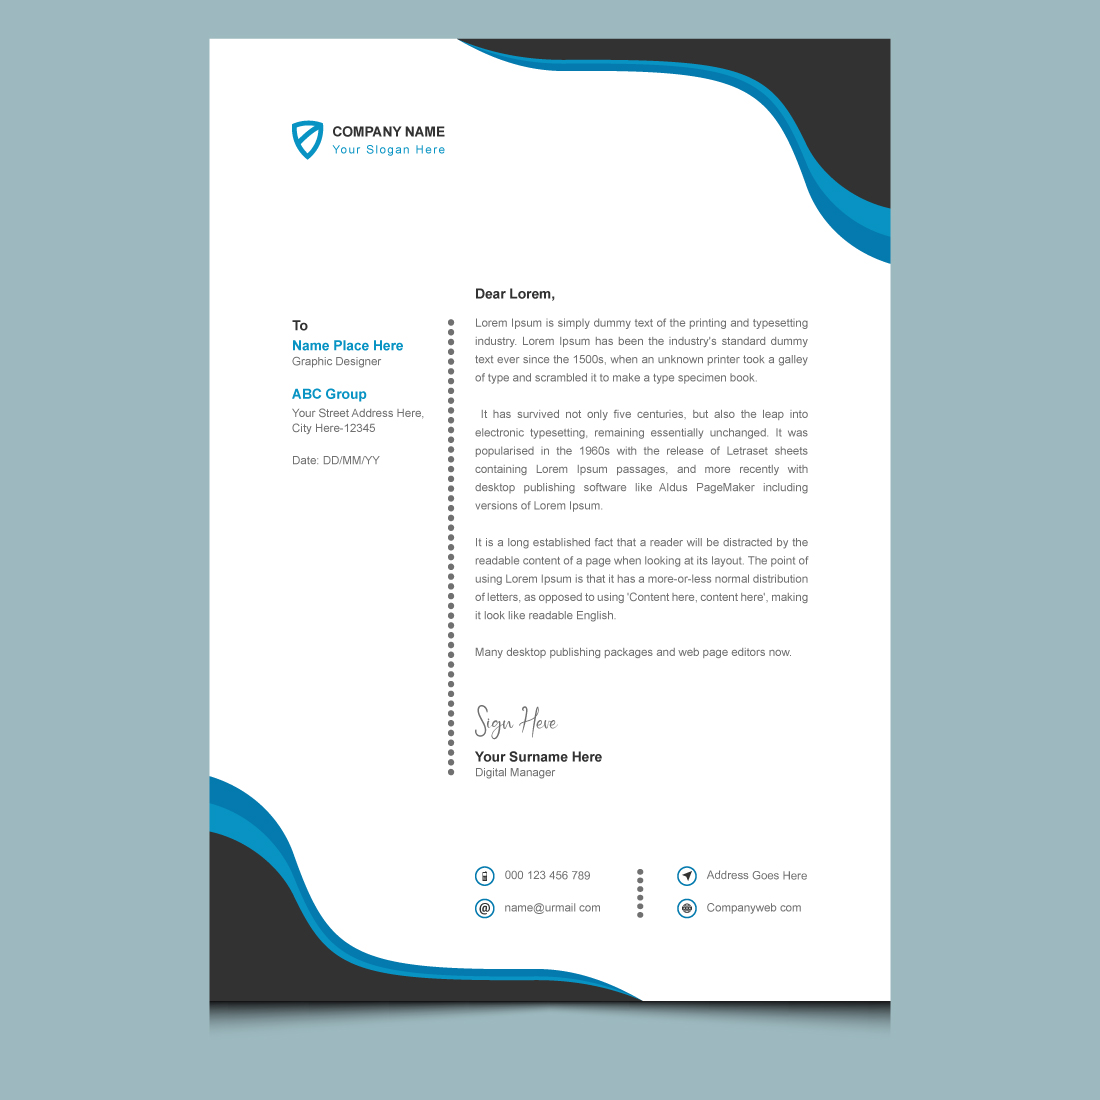 Clean minimal modern corporate business letterhead design template cover image.